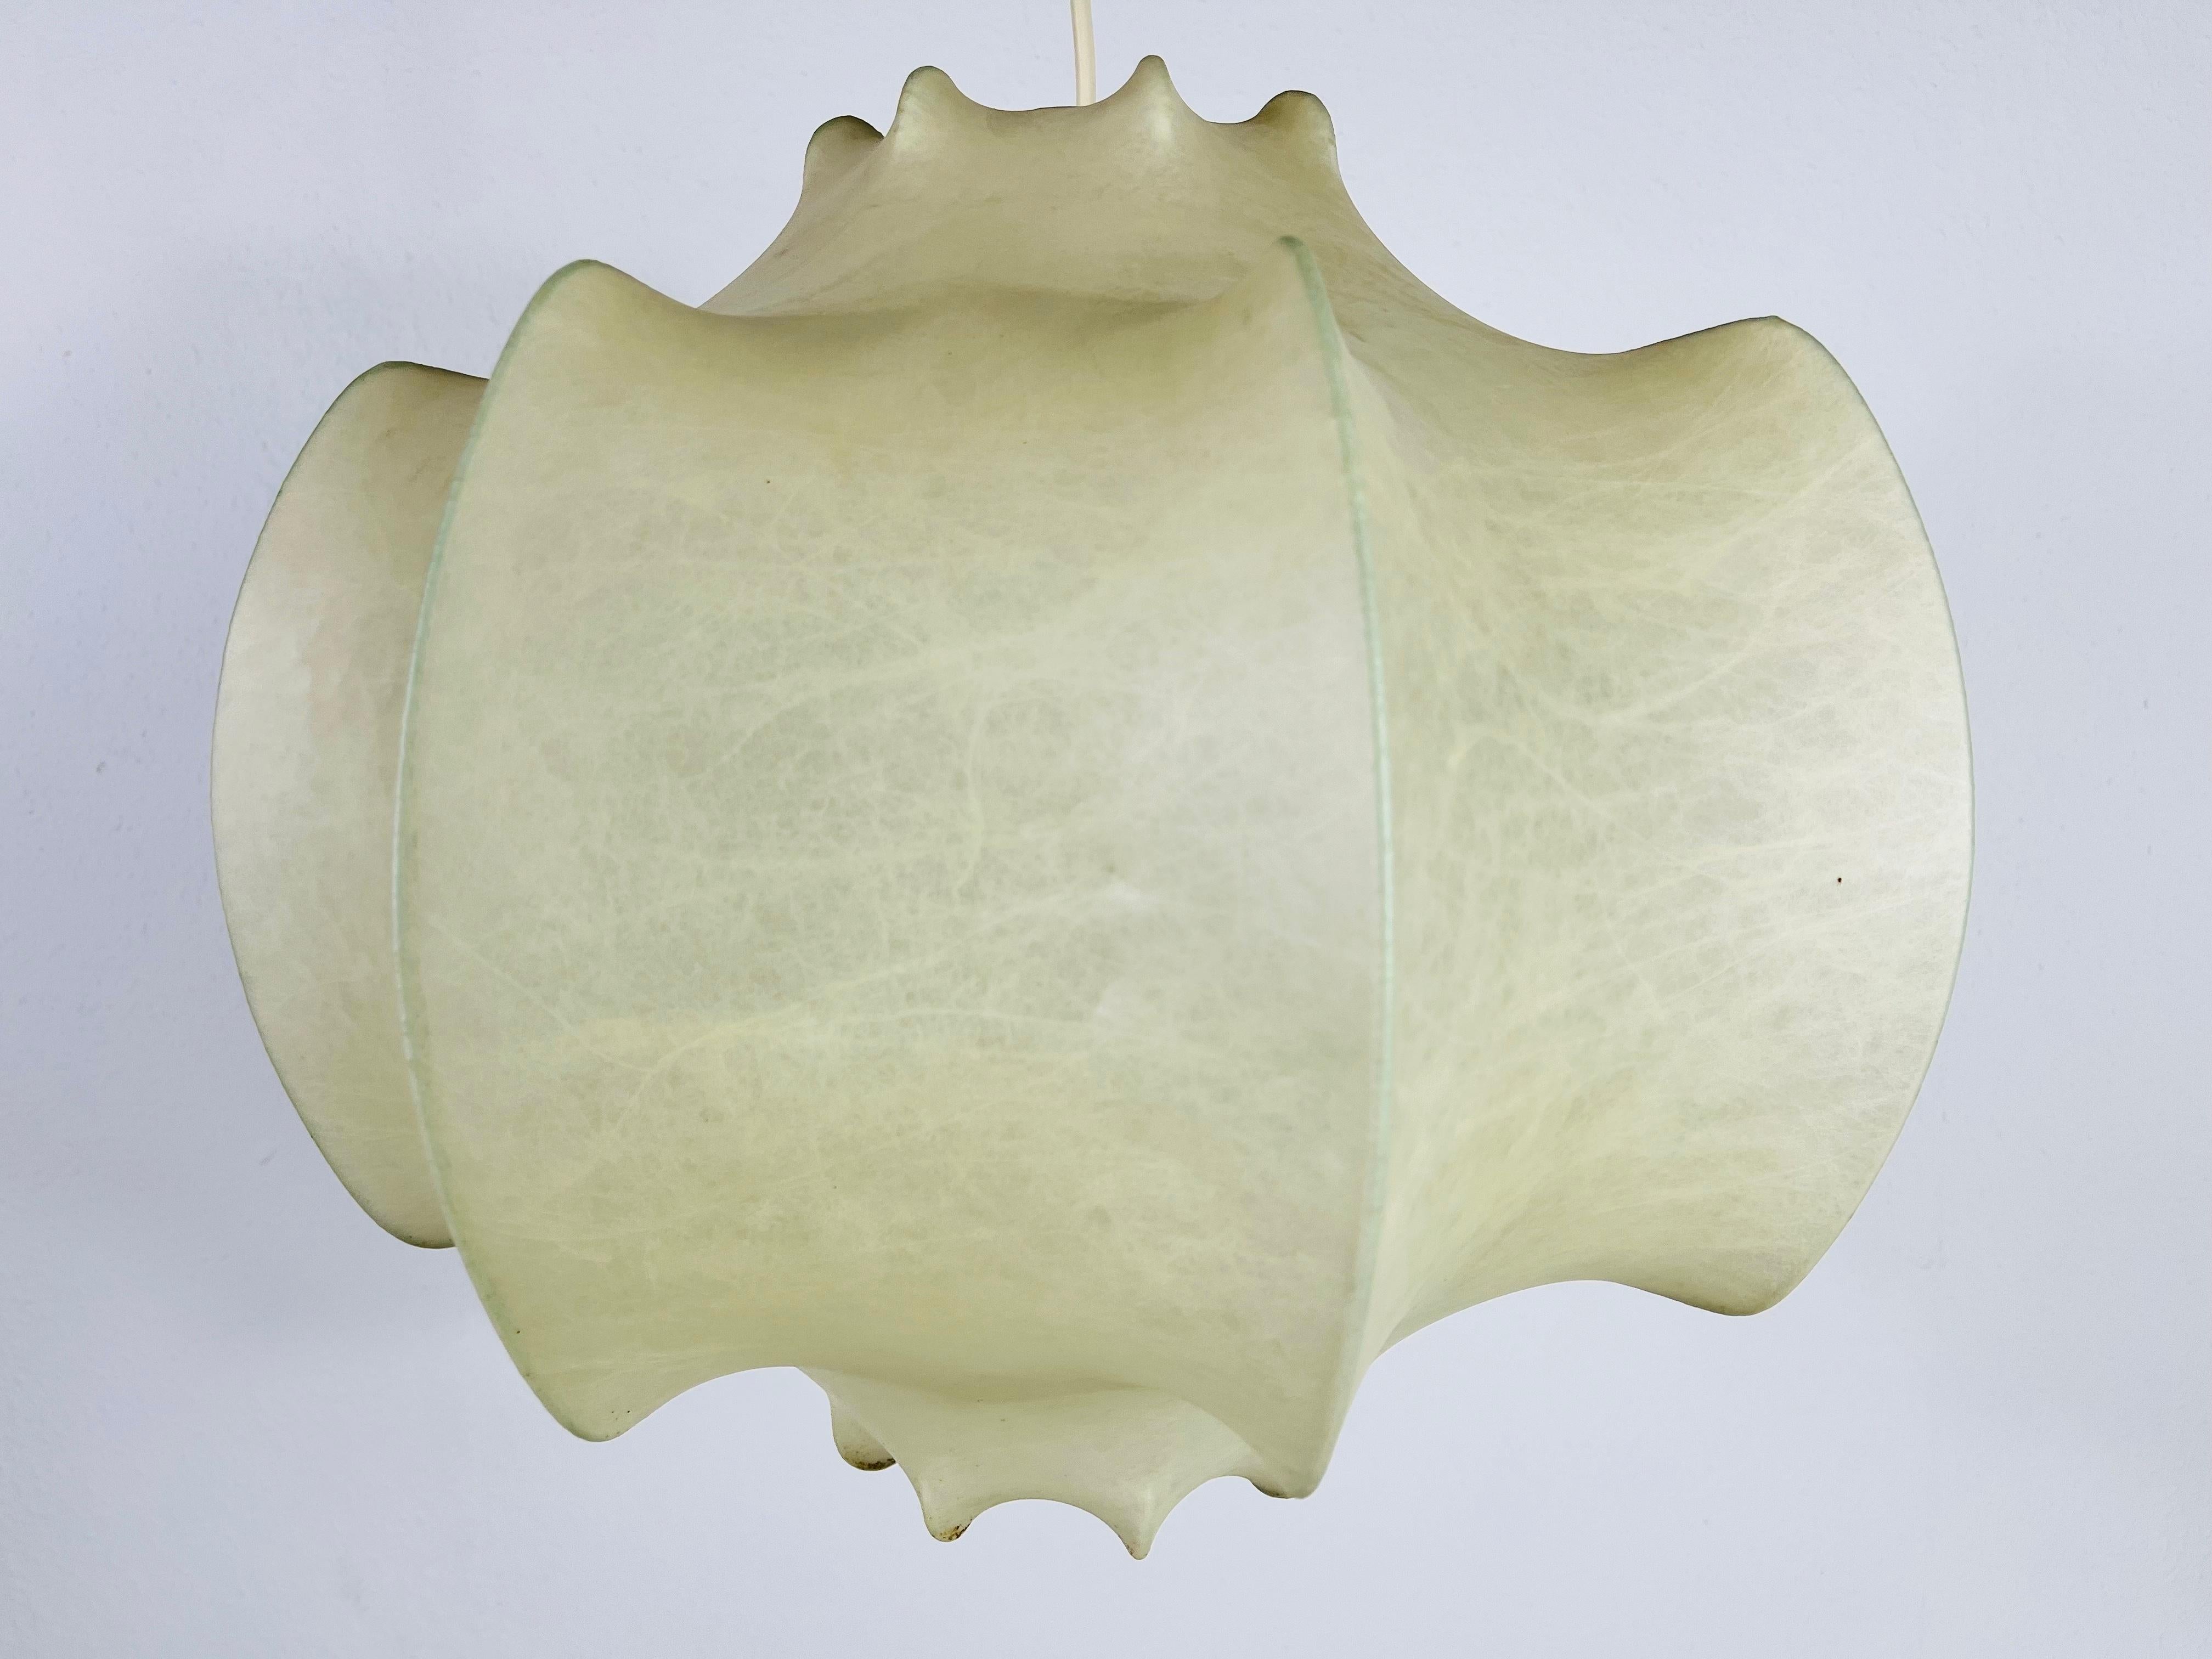 Mid-Century Modern Viscontea Cocoon Pendant Light by Achille and Pier Giacomo Castiglioni for Flos